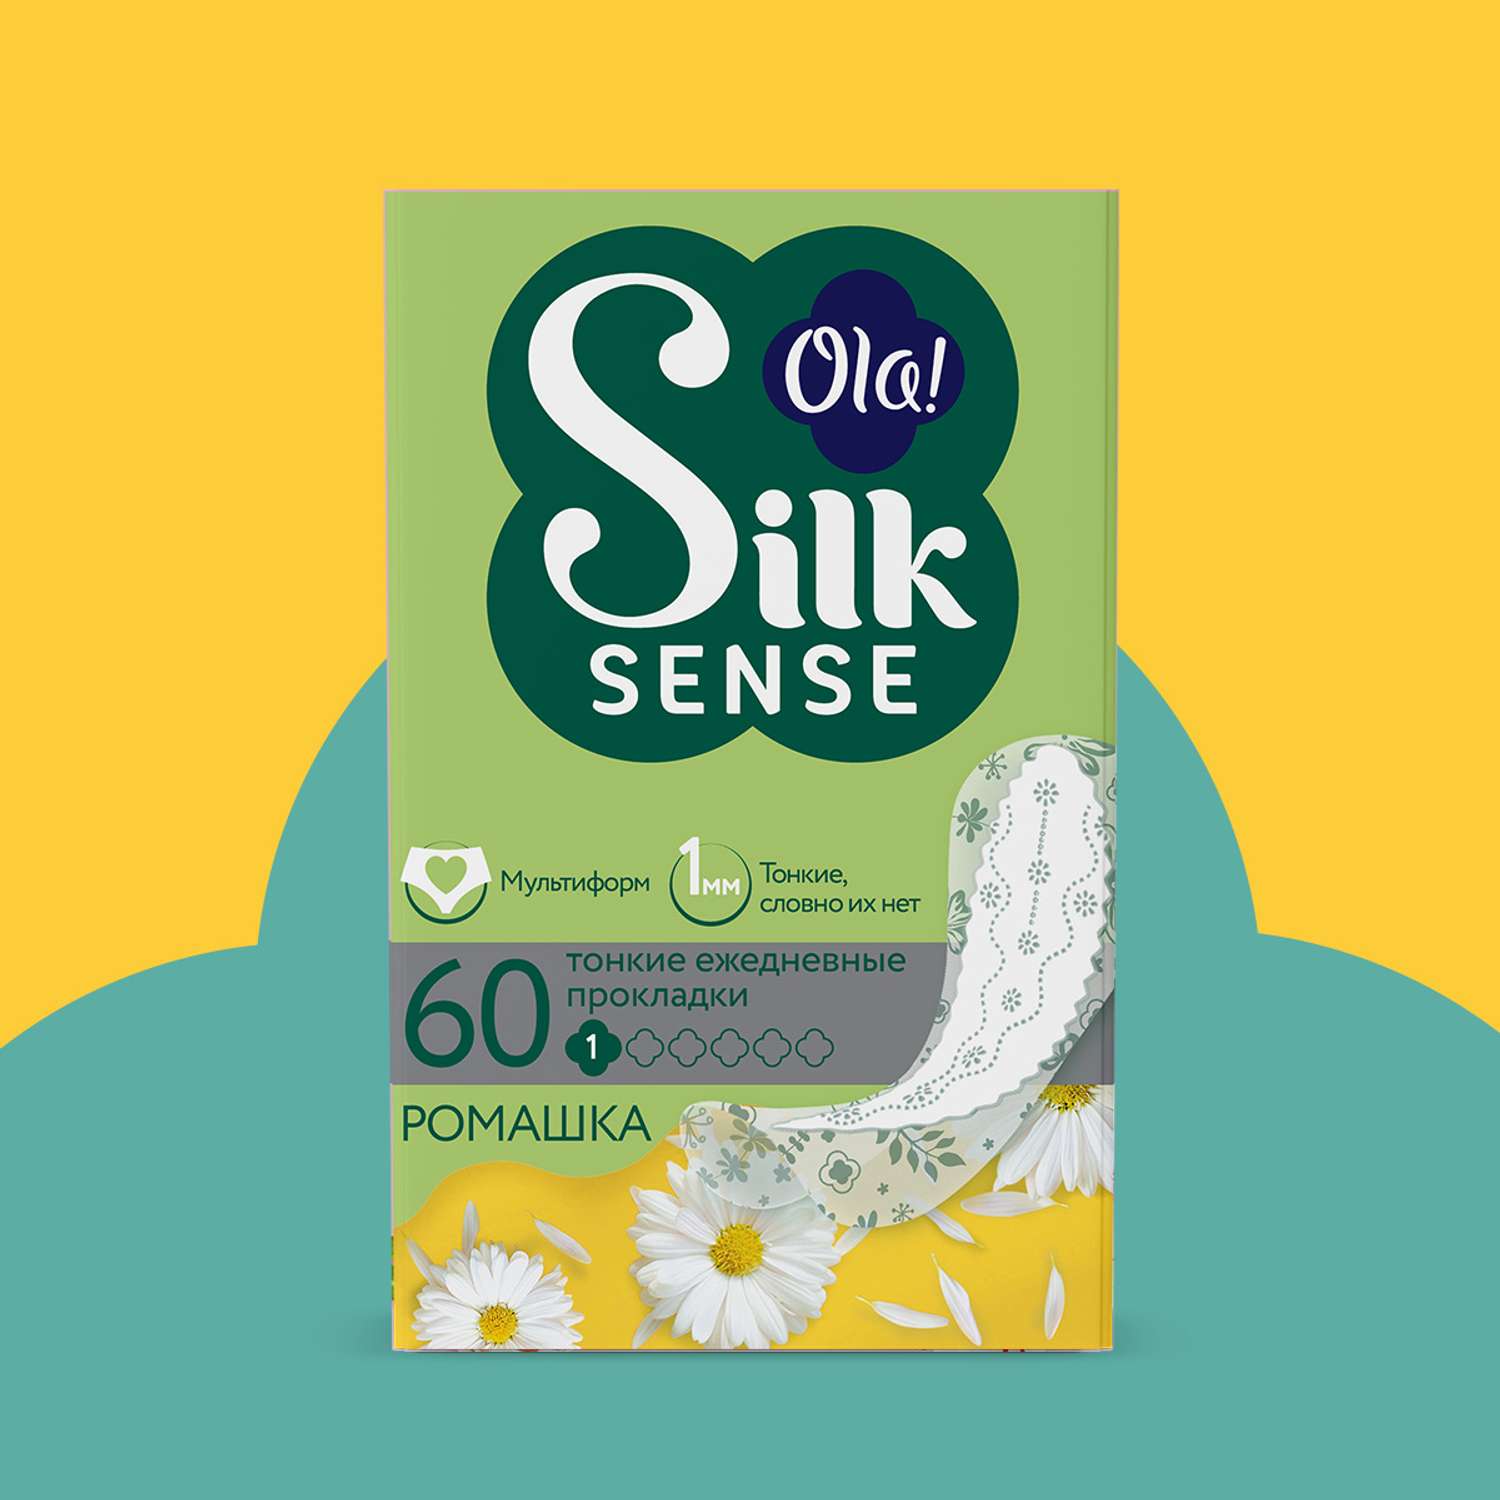 Ежедневные прокладки тонкие Ola! Silk Sense LIGHT стринг-мультиформ аромат Ромашка 60 шт - фото 1